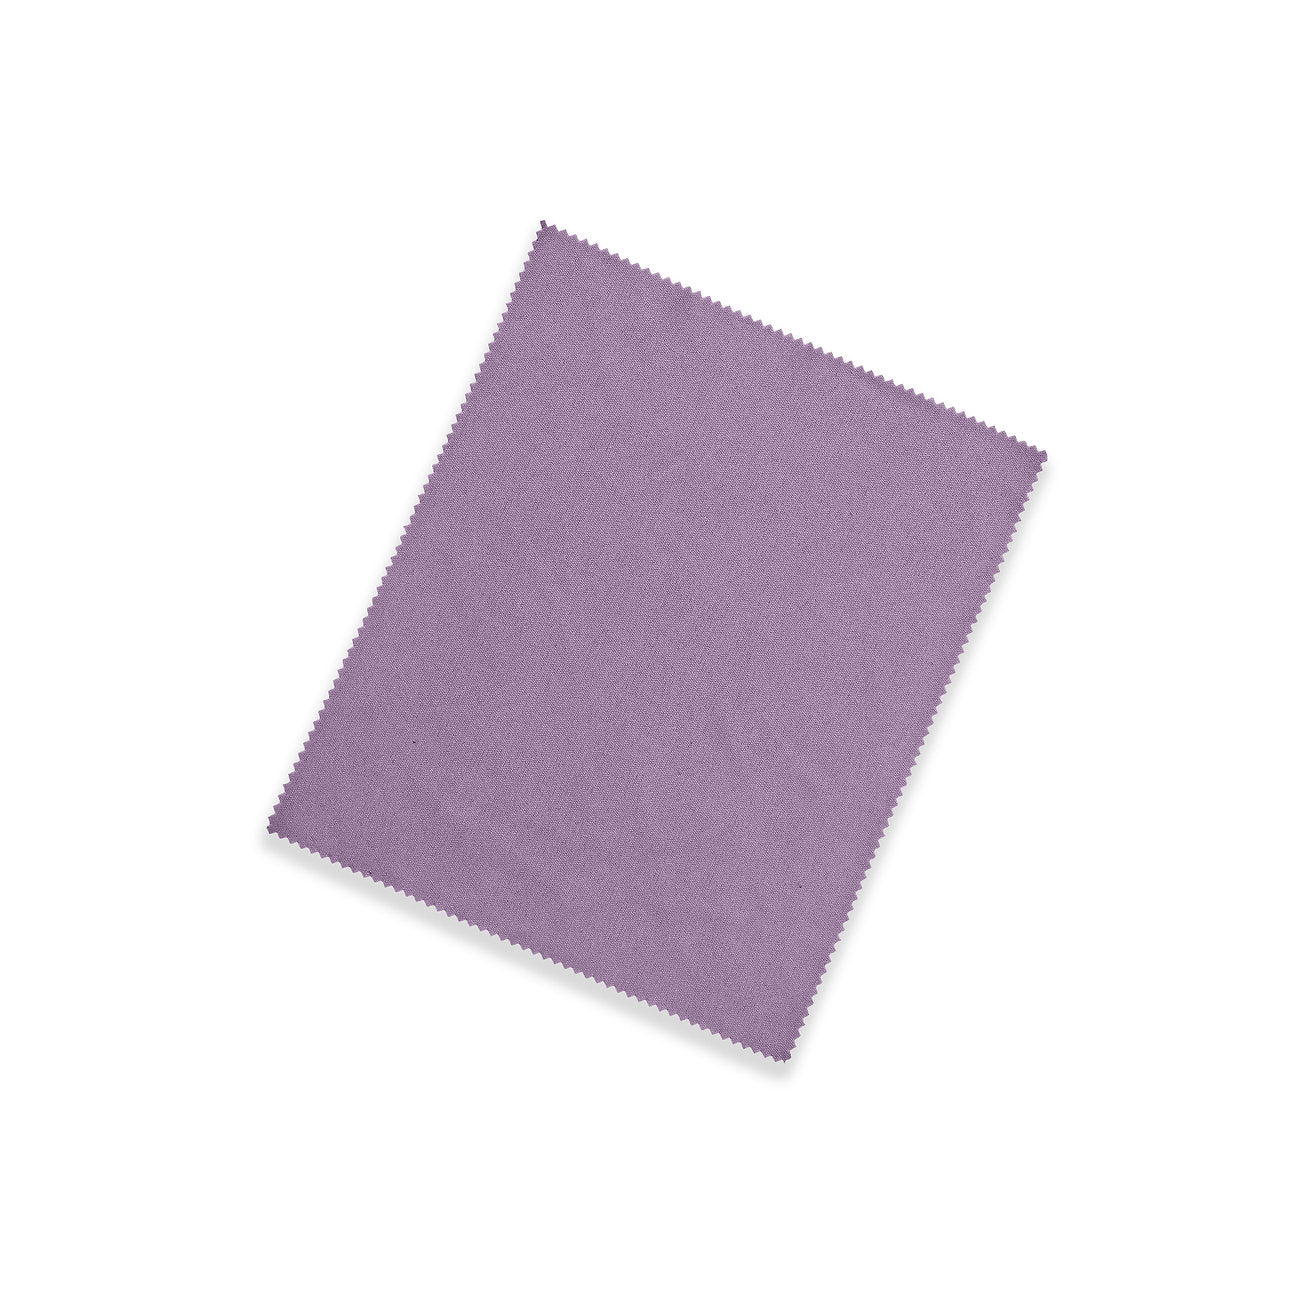 Lavender microfiber cloth